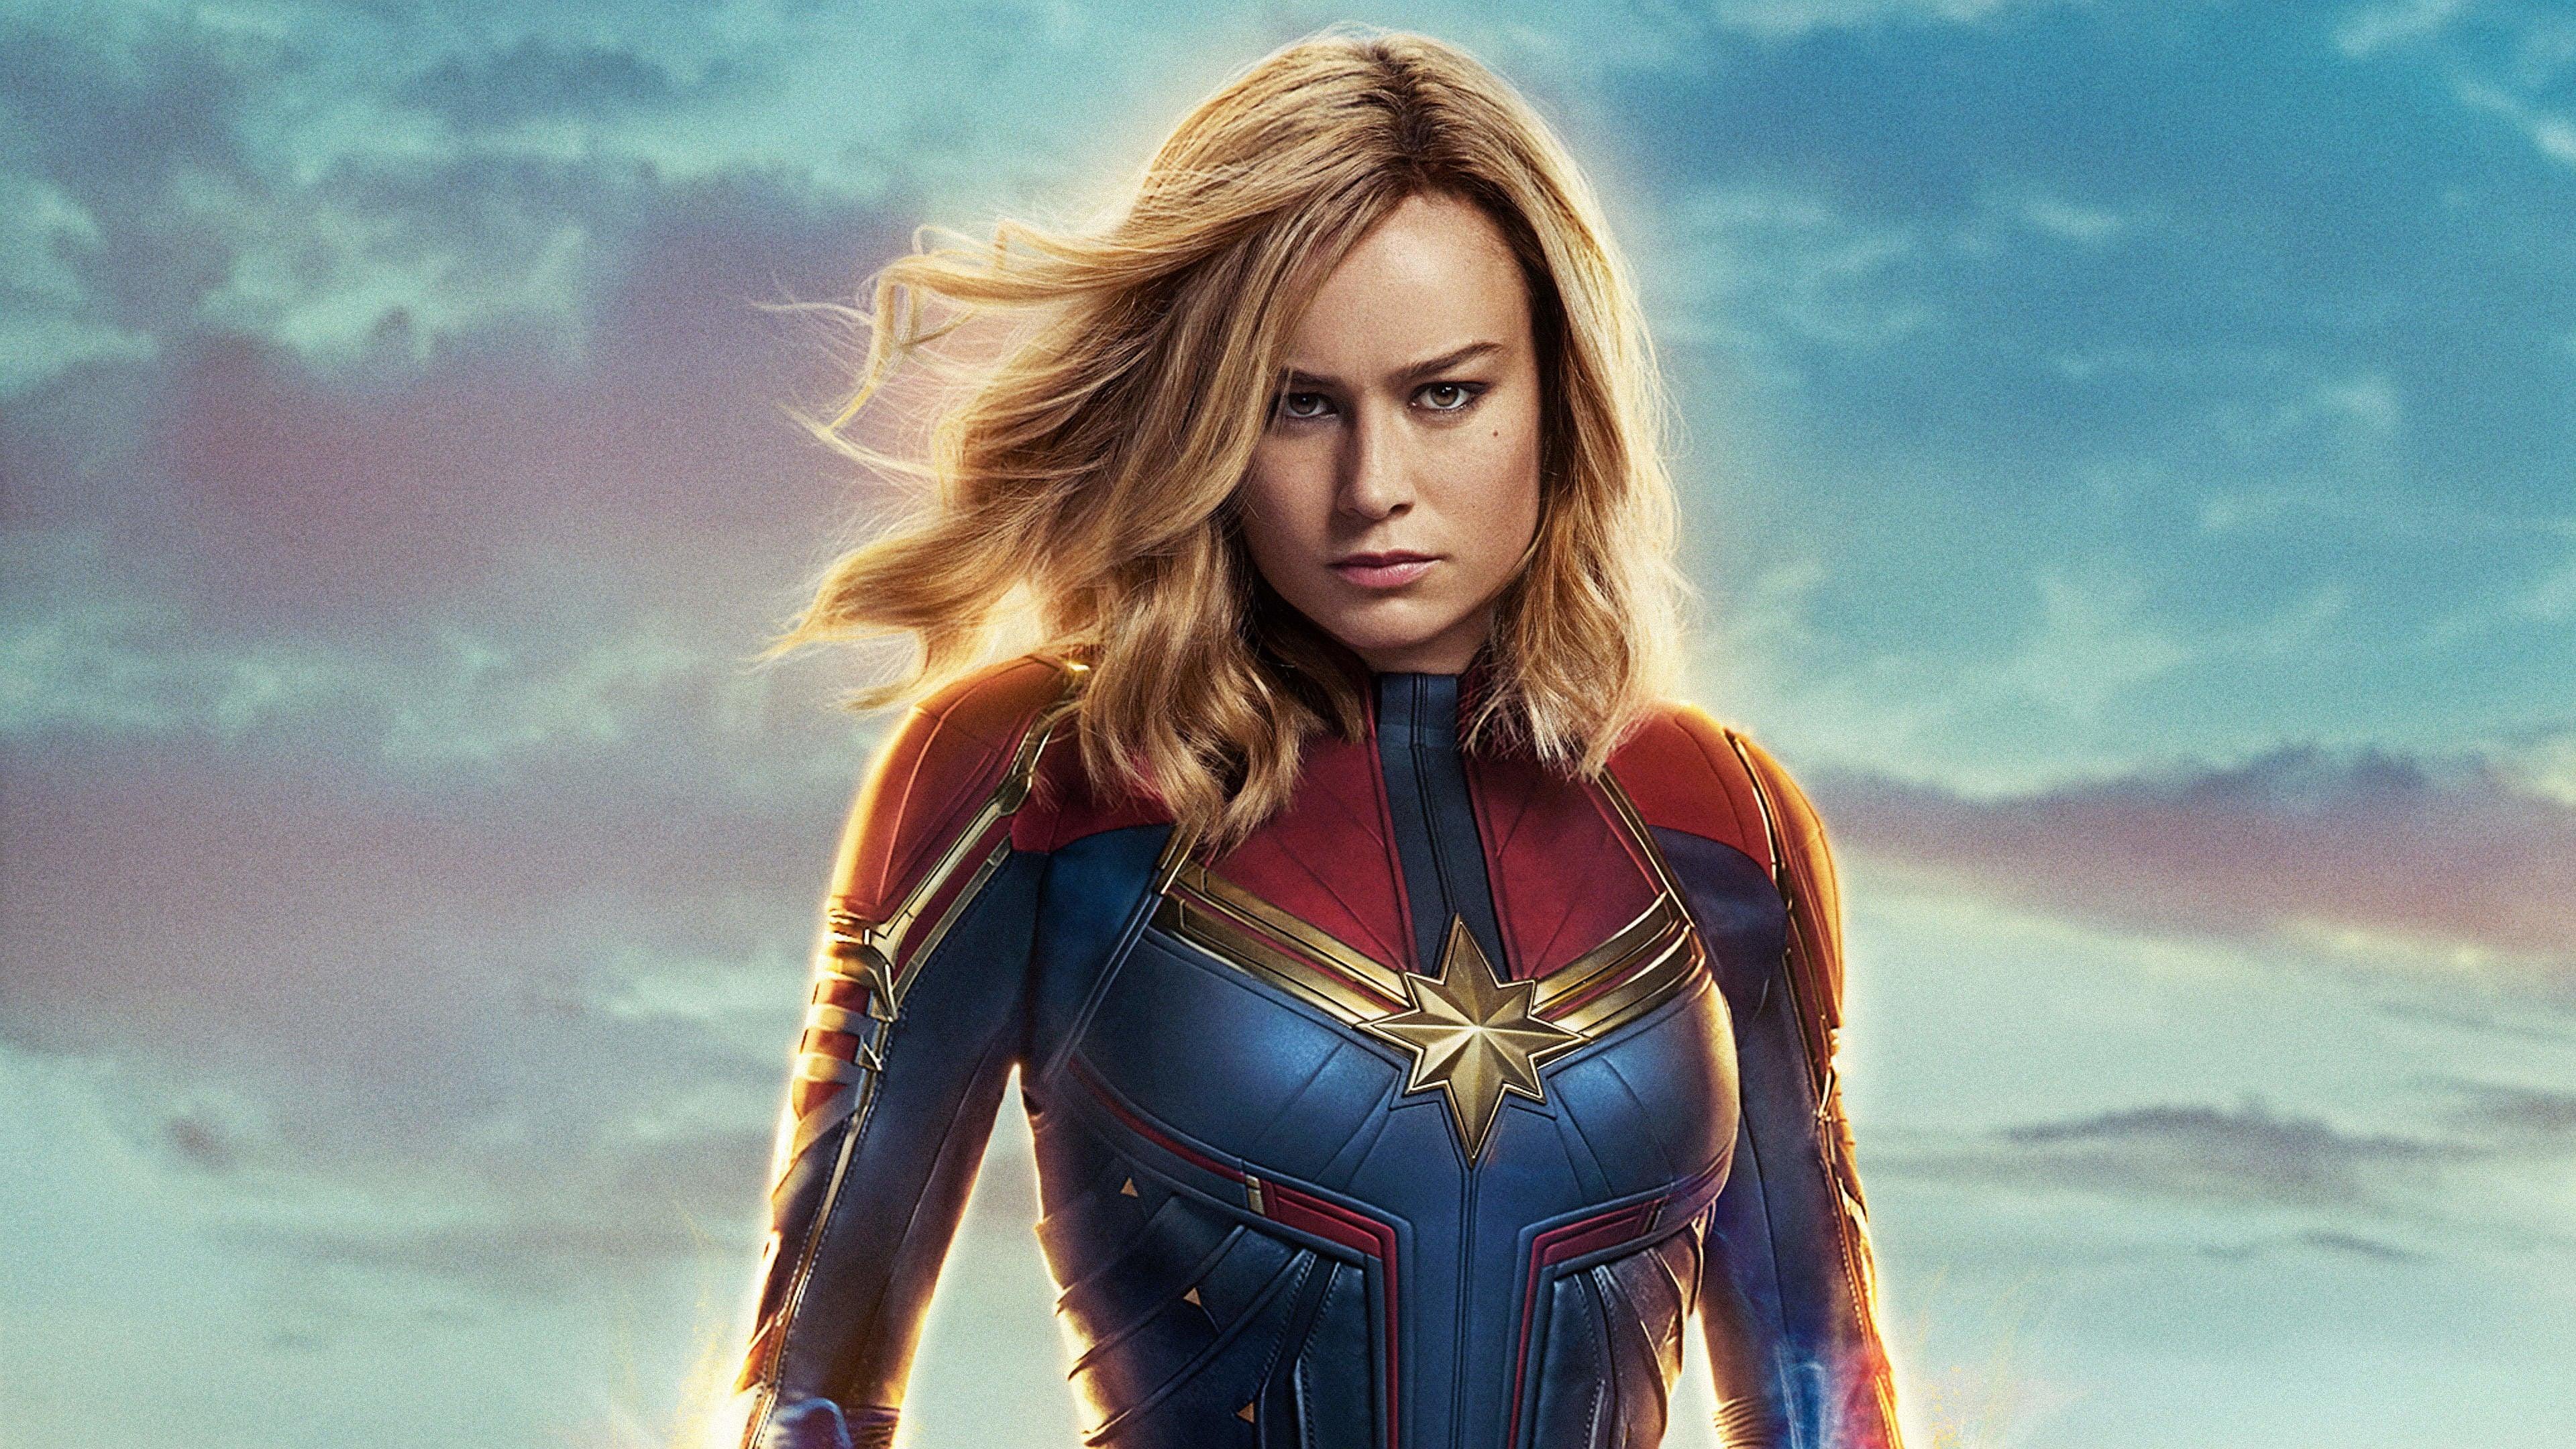 Wallpaper Brie Larson, Captain Marvel 2019 3840x2160 UHD 4K Picture